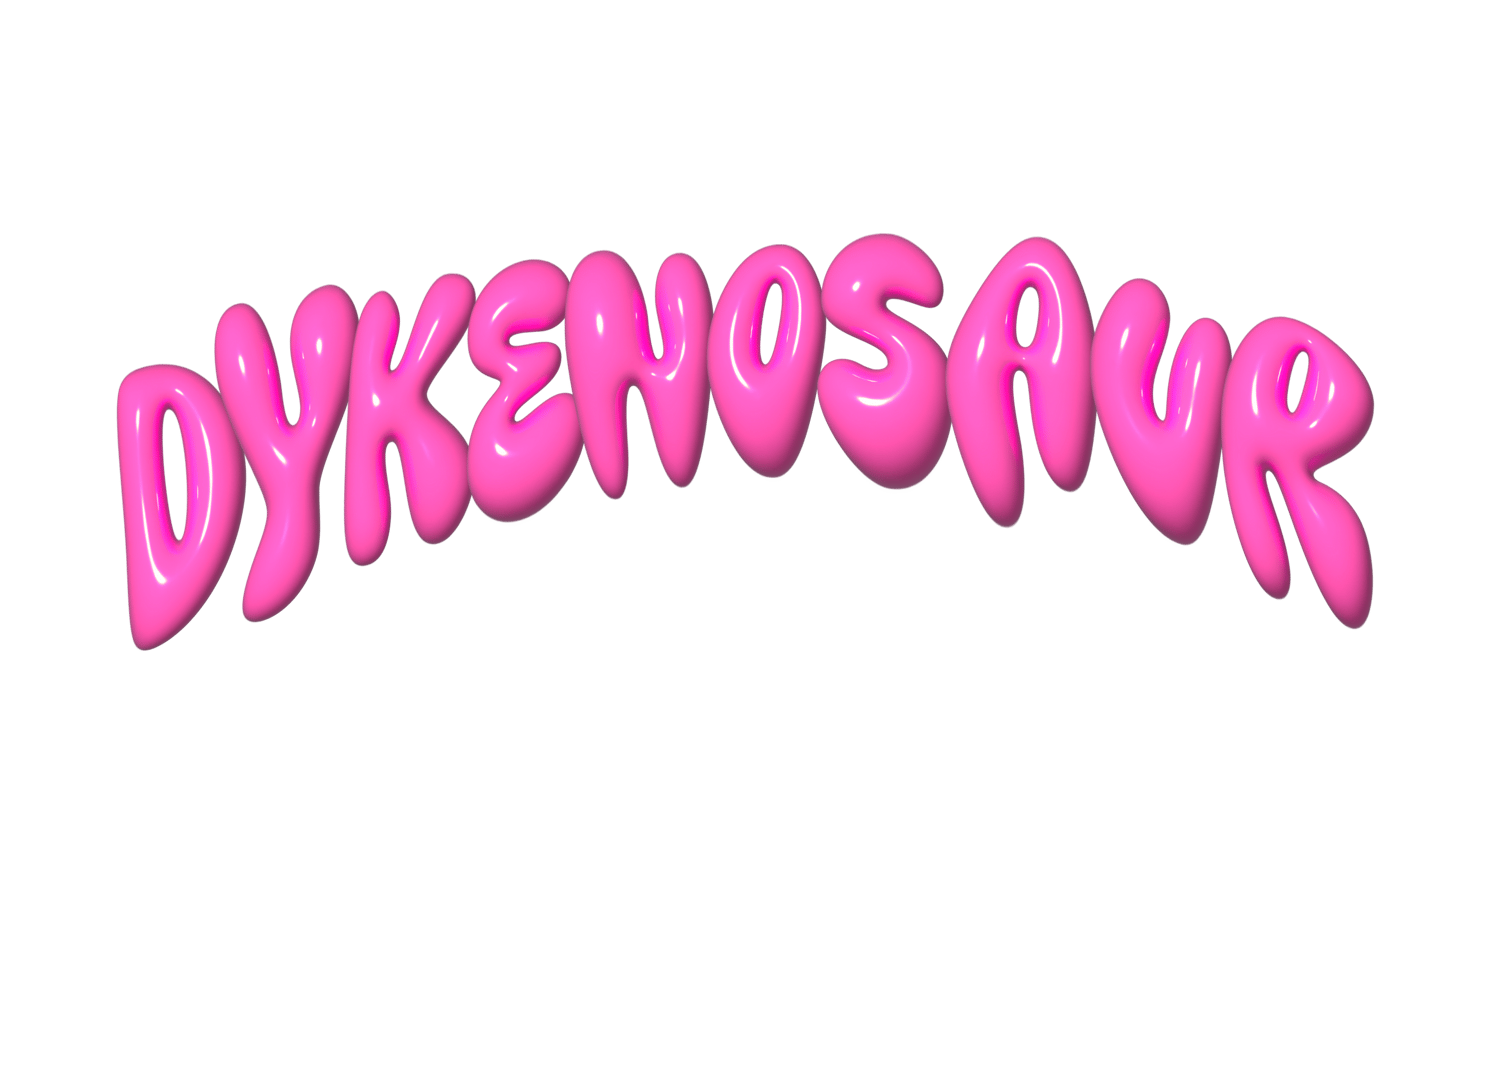 dykenosaur Home